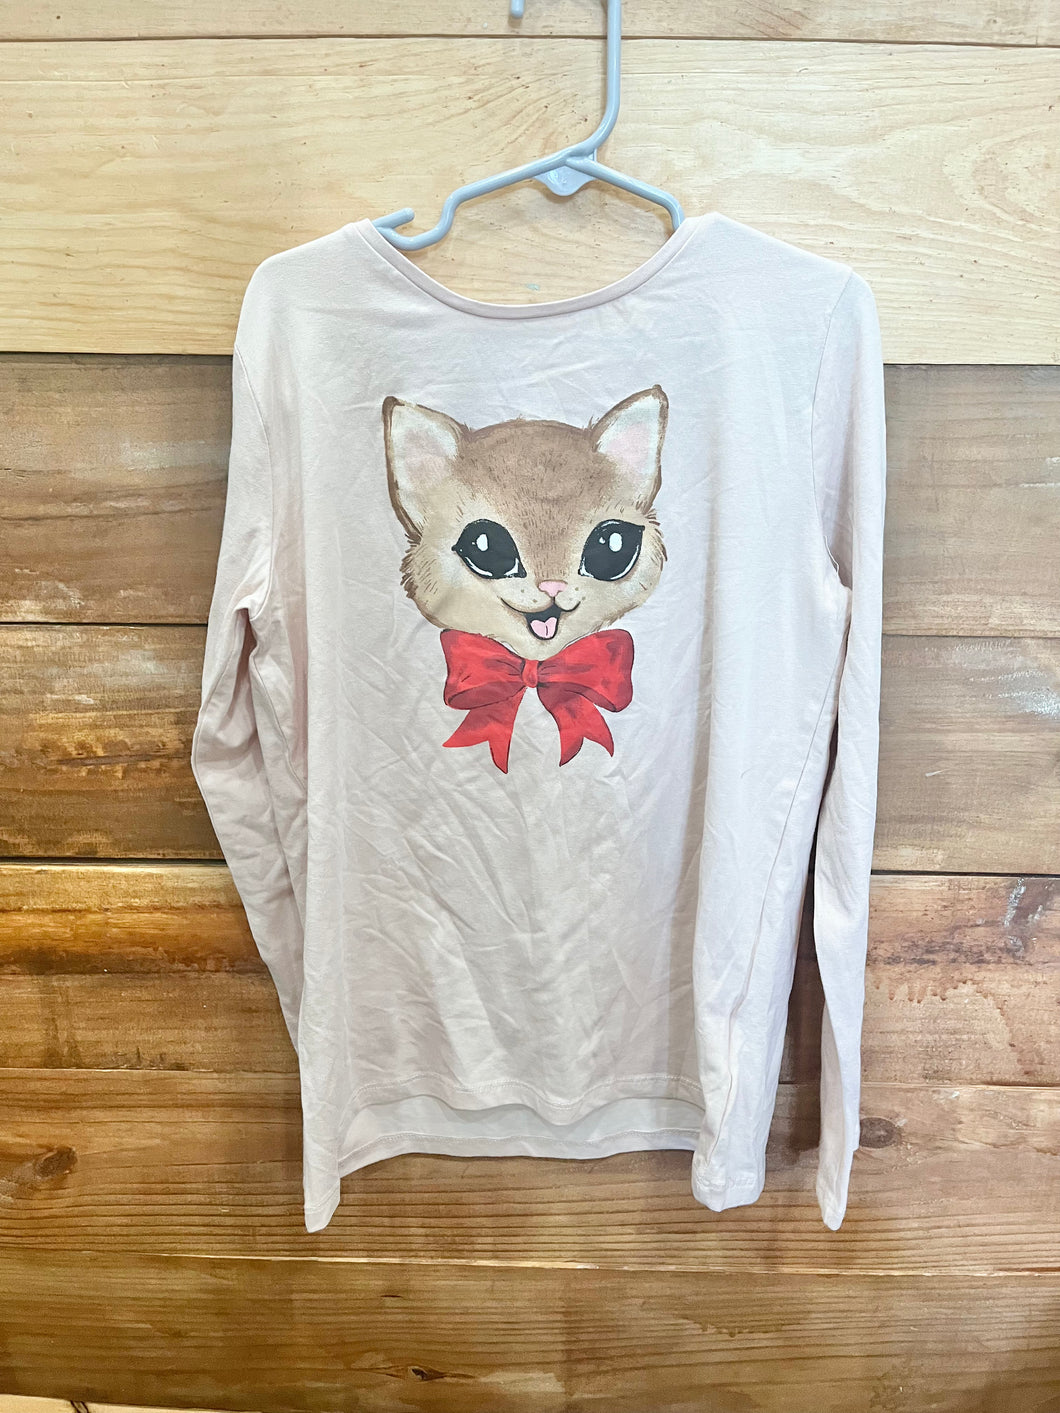 H&M Pink Kitten Shirt Size 8-10